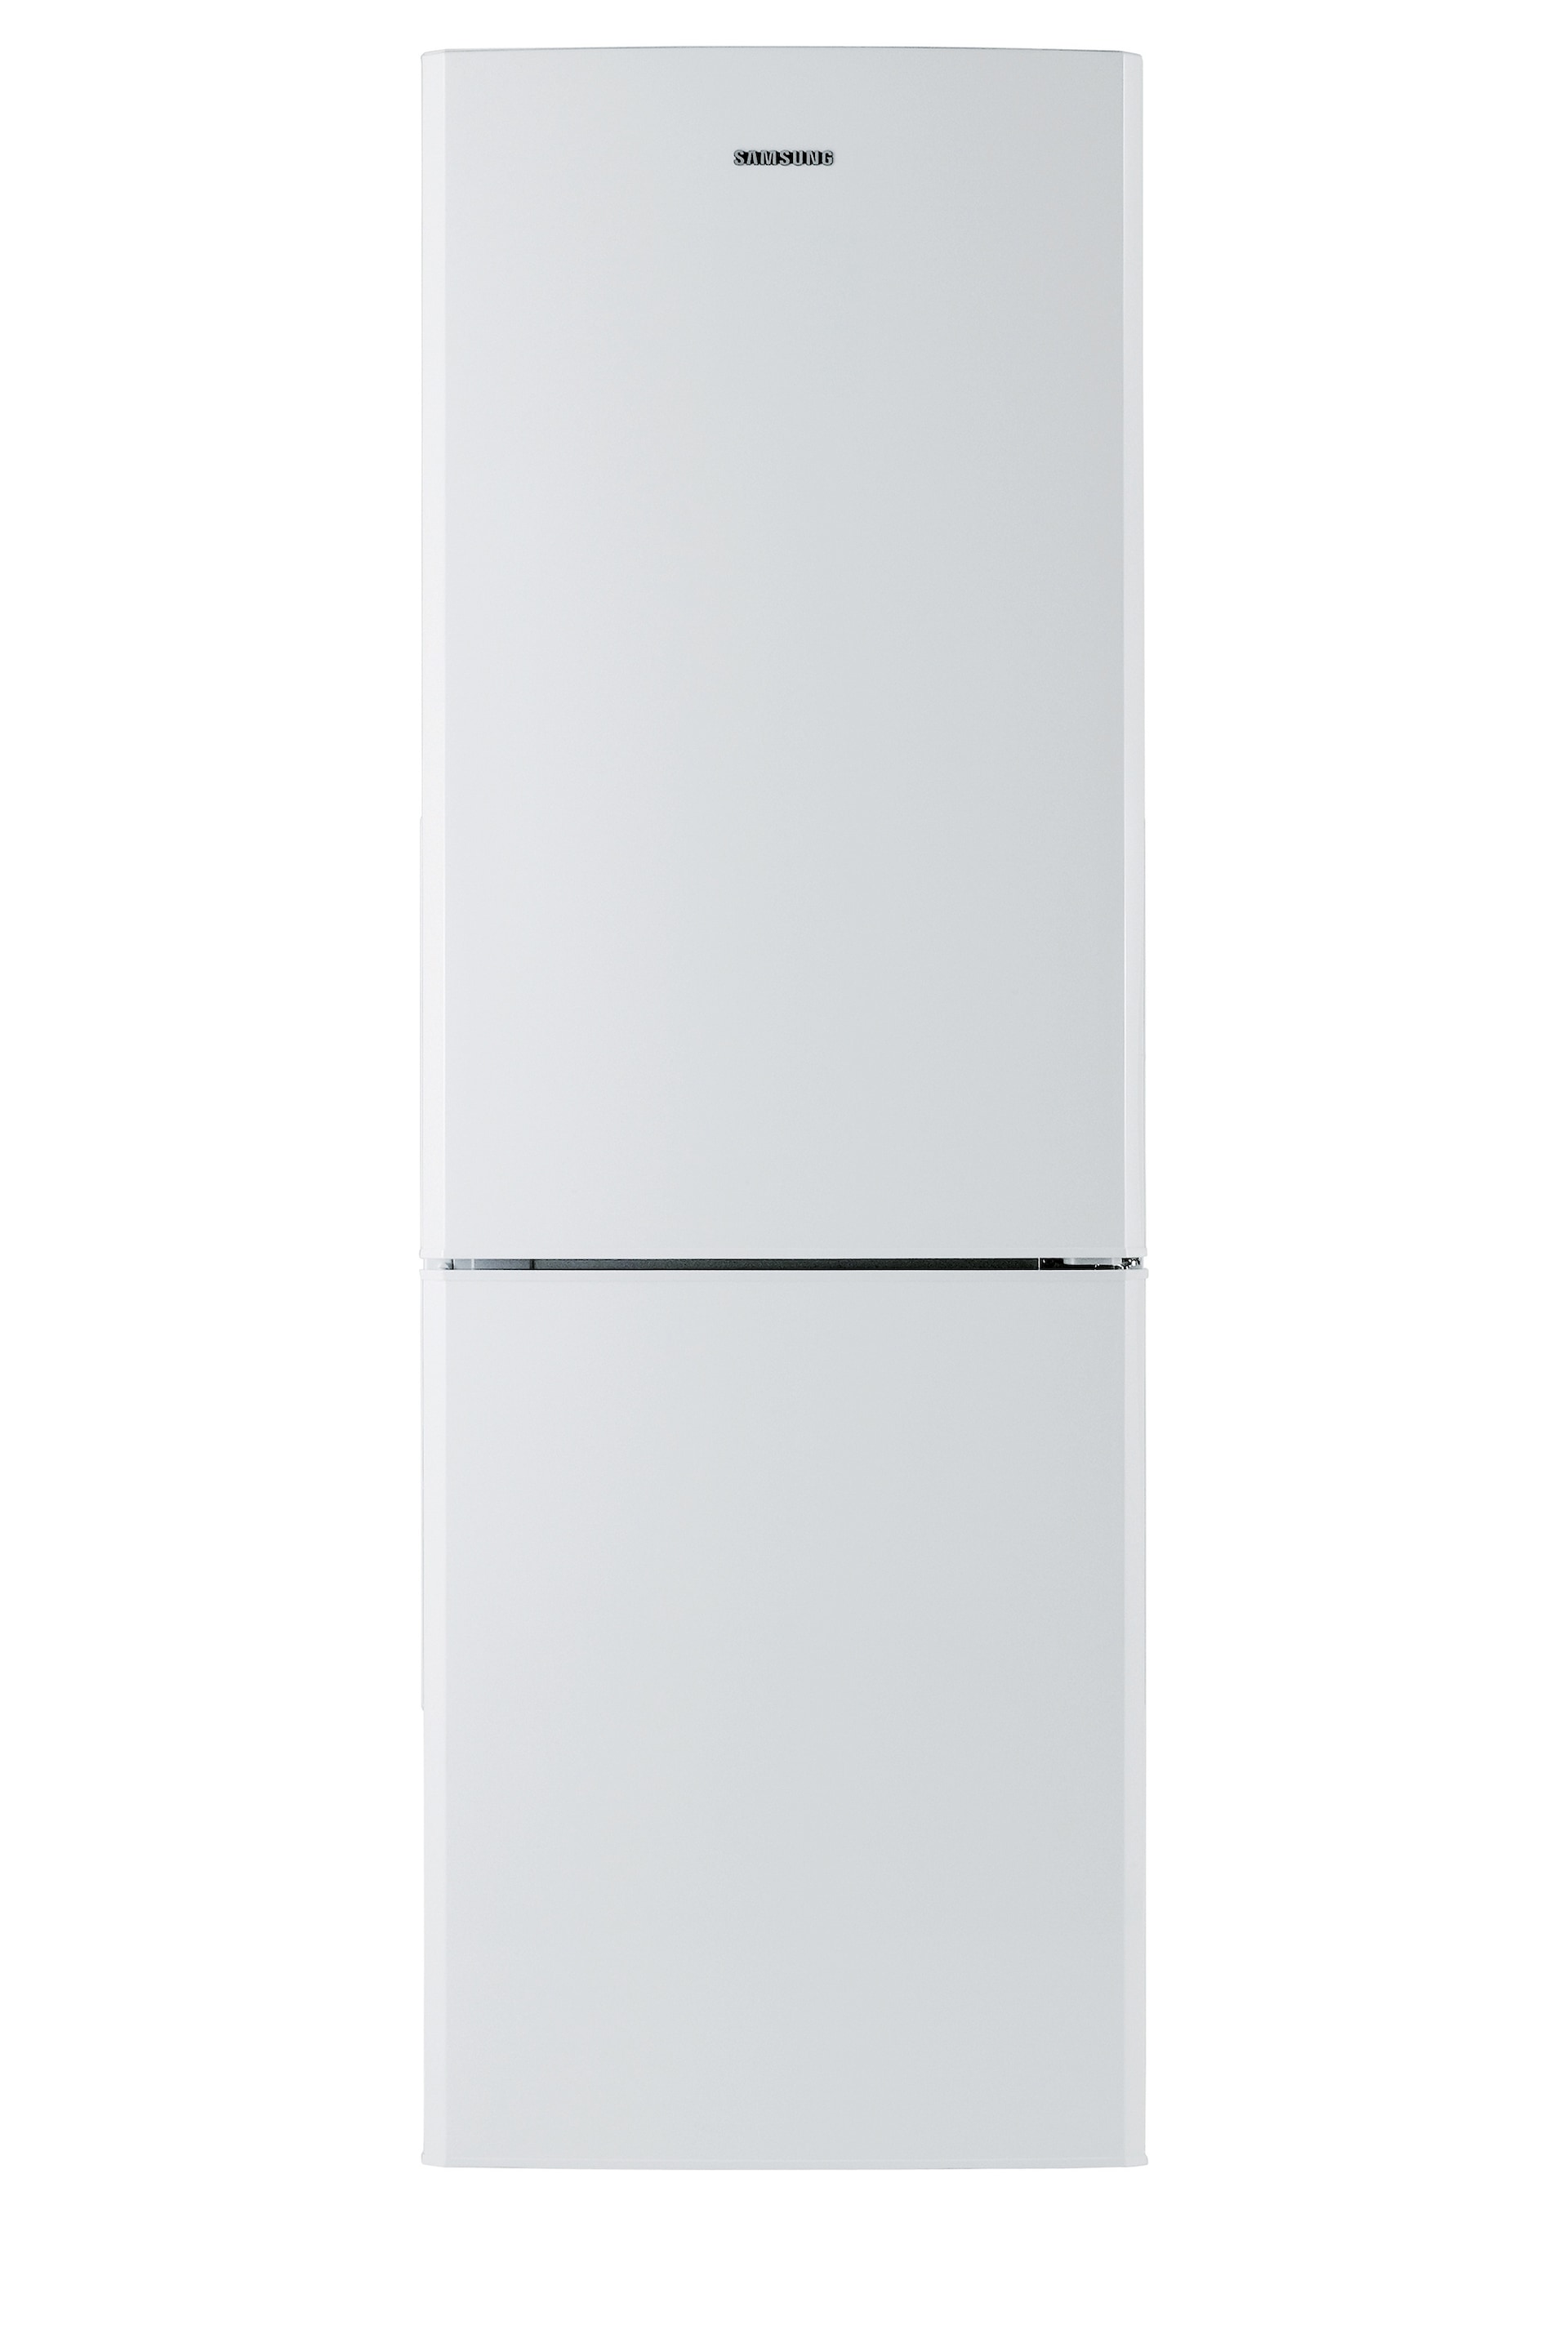 Samsung rl 34. Холодильник Samsung rl33. Холодильник самсунг rl34scsw. Samsung RL-34 ECSW.